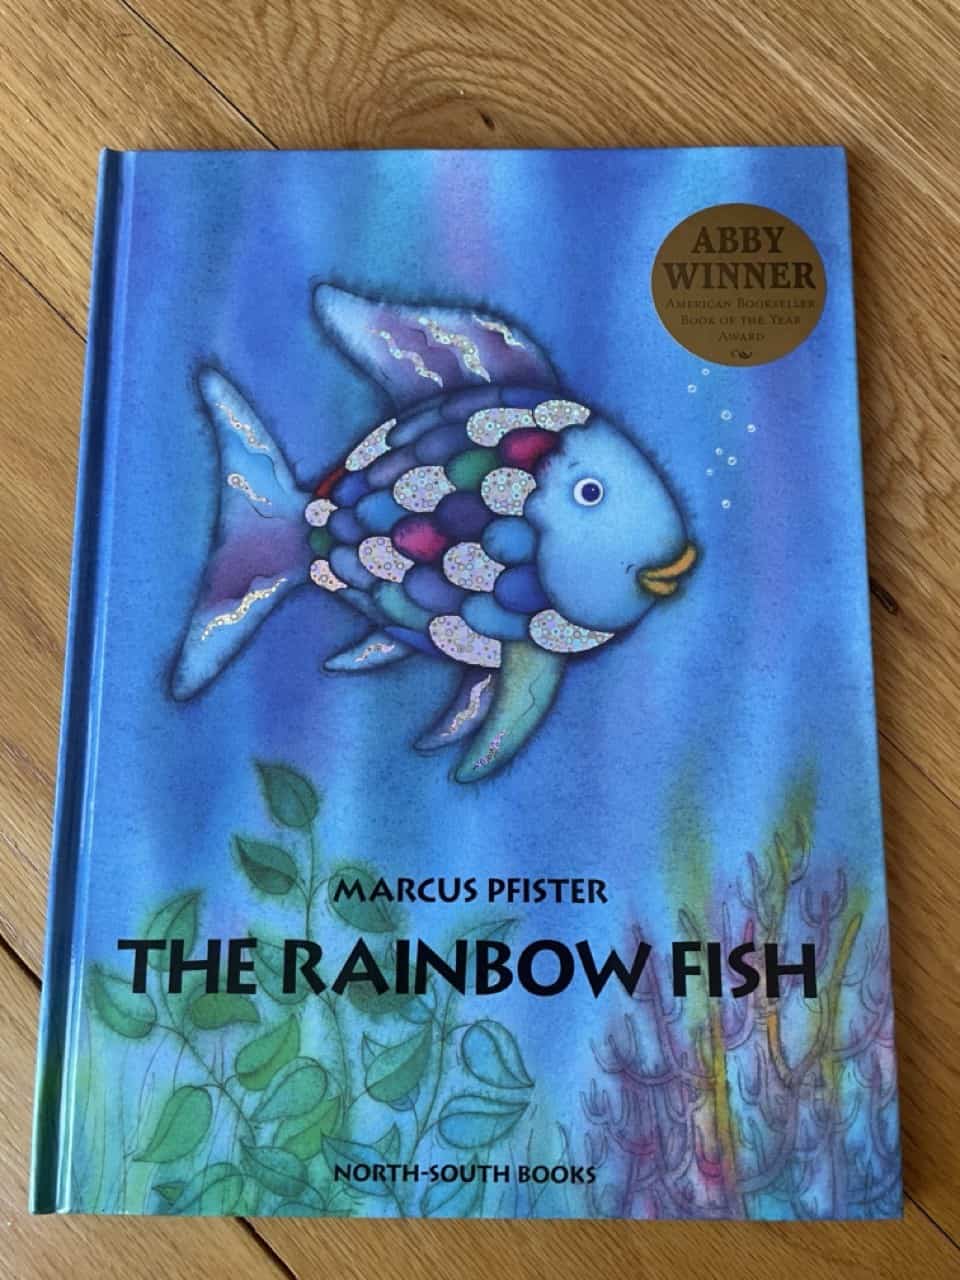 The Rainbow Fish book